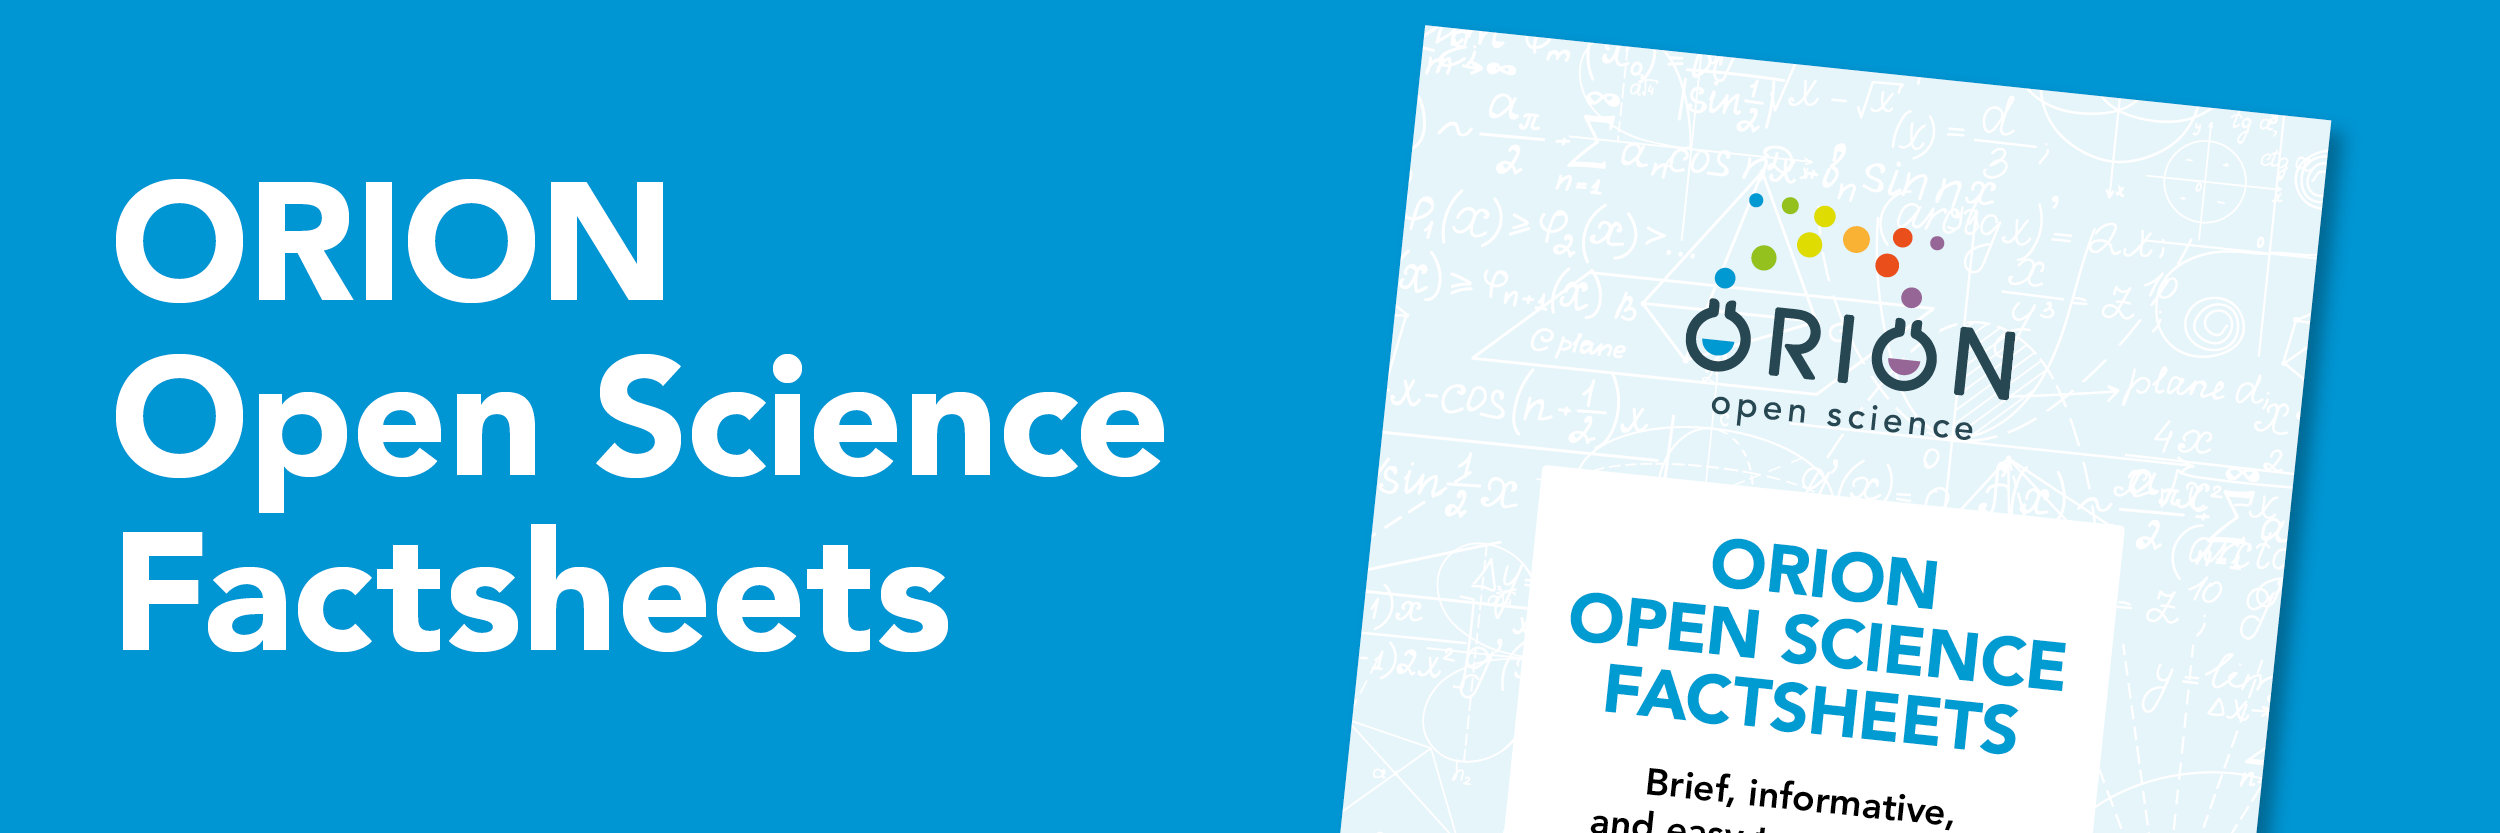 ORION Open Science Factsheets